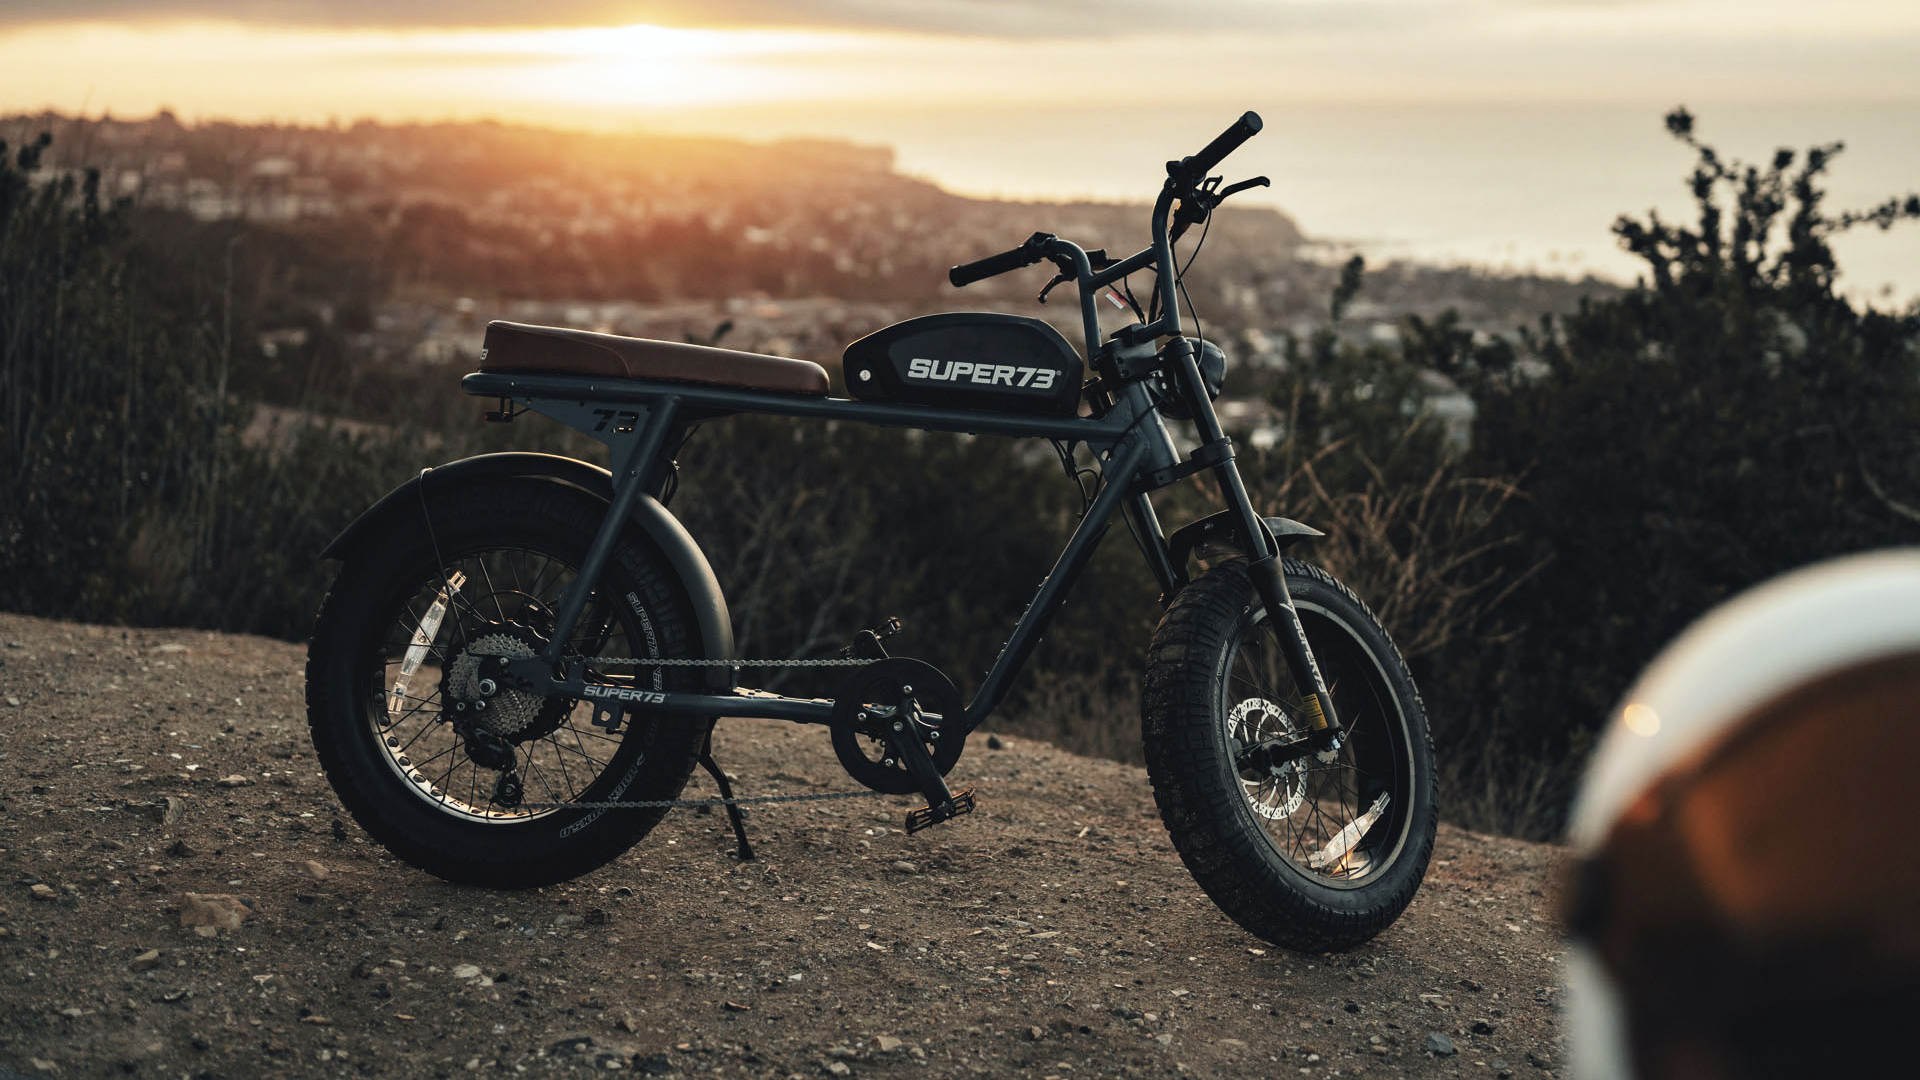 The Super73 S2 e-bike on a sunset ridge.